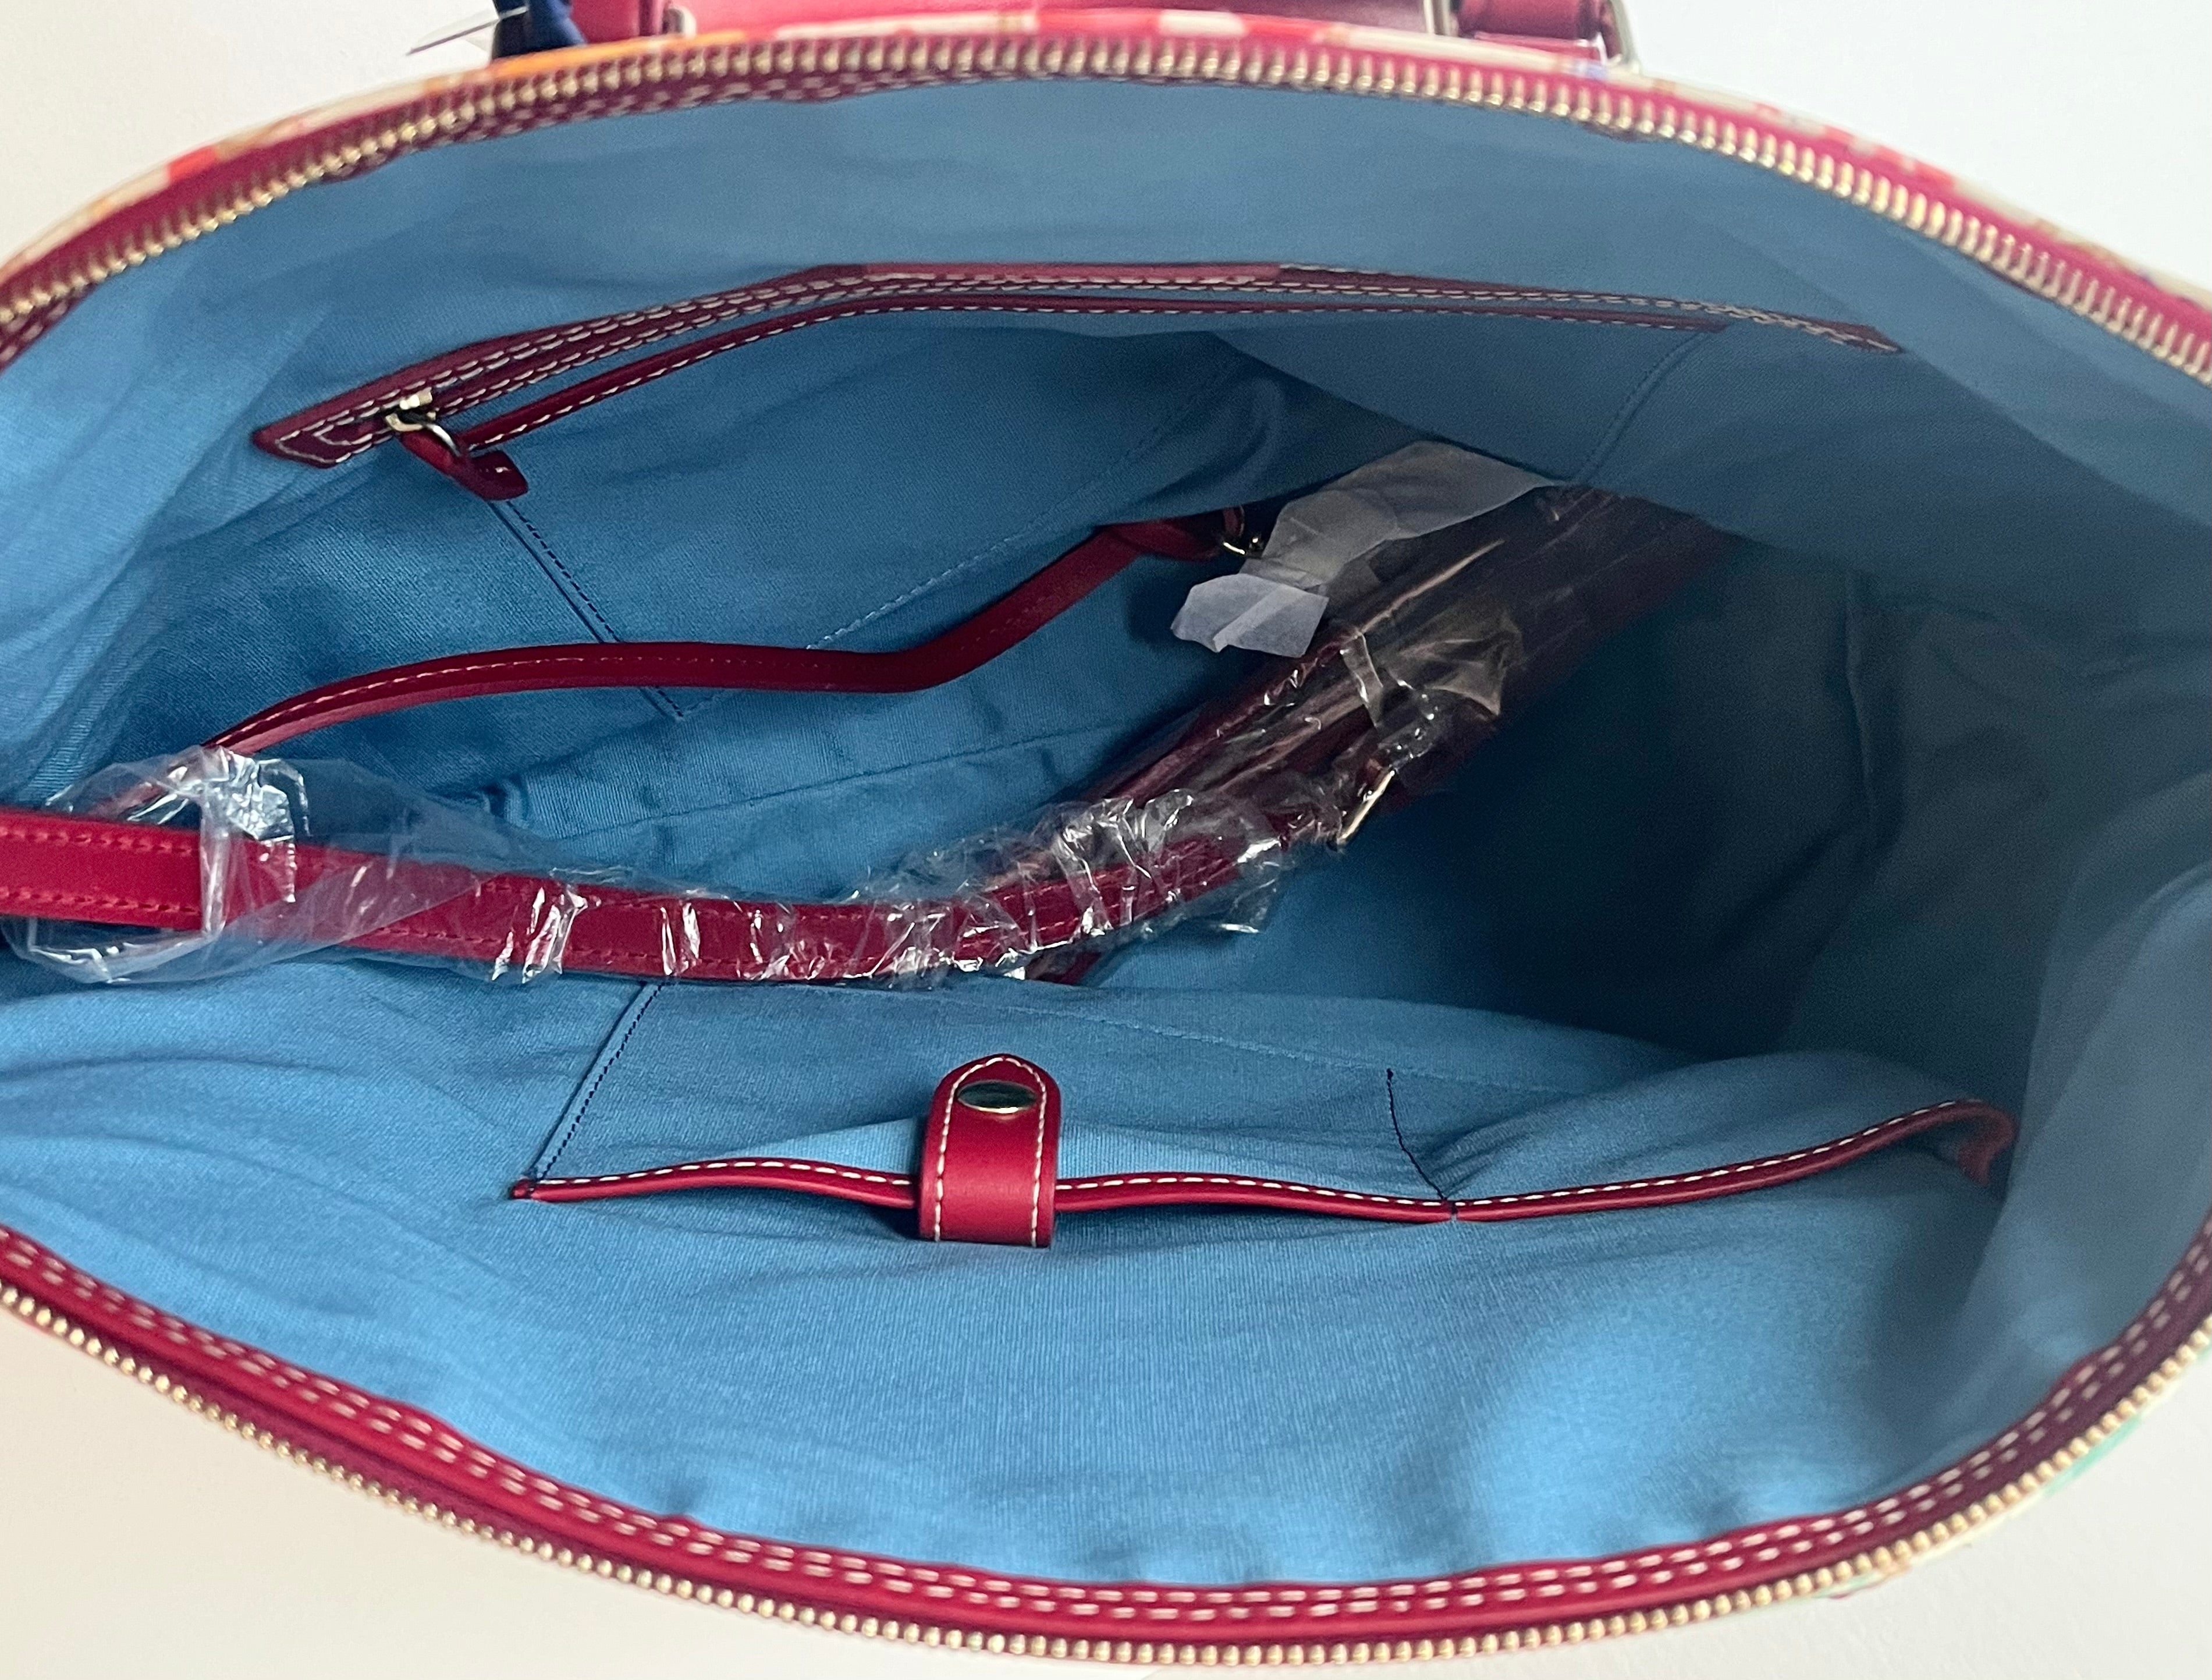 Pre-Owned Dooney & Bourke Large Multicolor Splash/Splatter Paint Vanessa Satchel Handbag with Long Strap